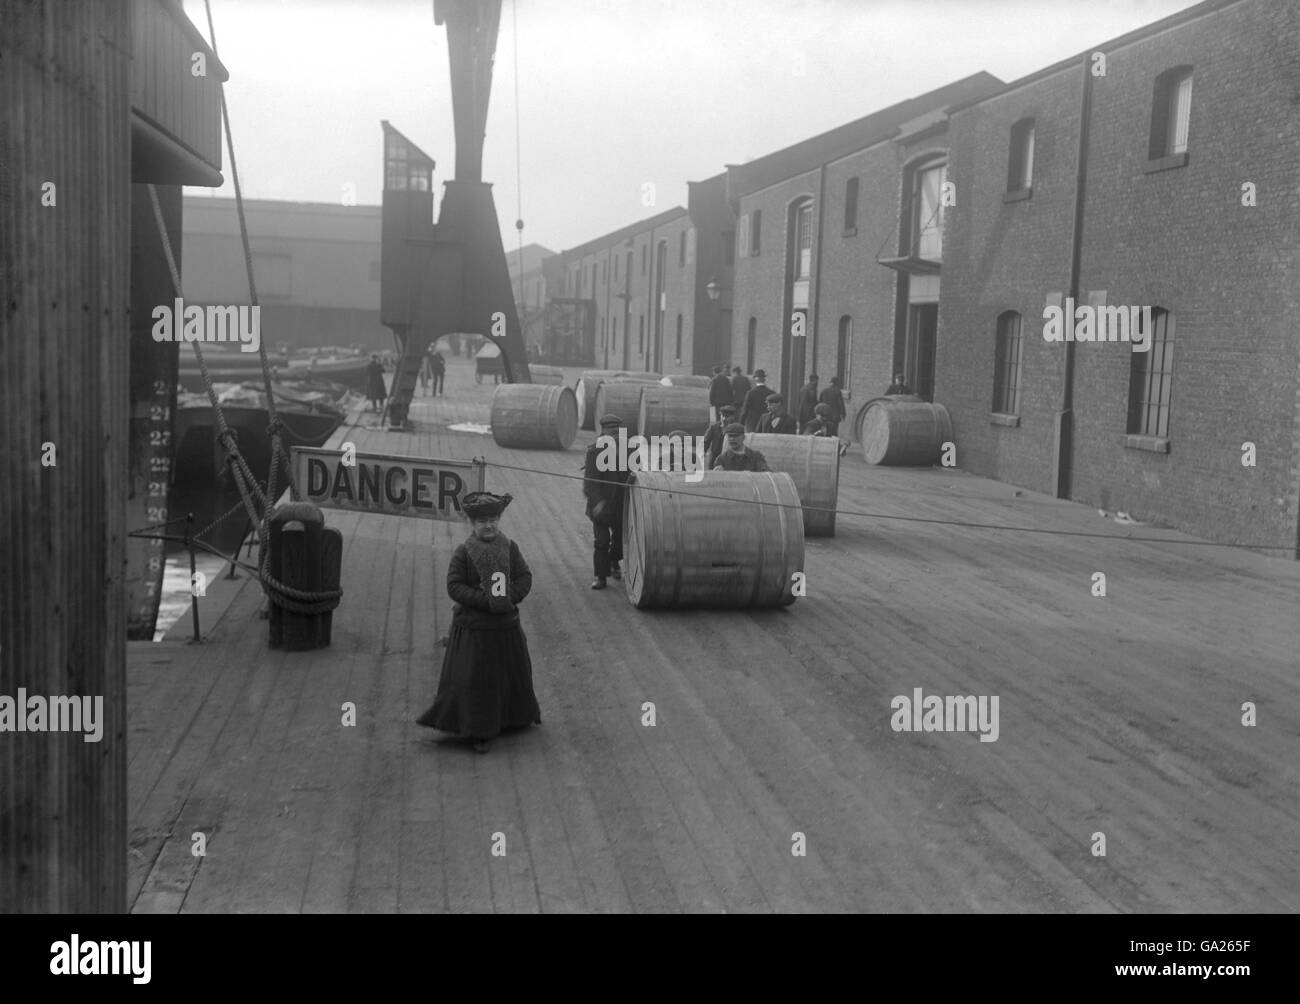 The Docks of London - Royal Victoria Docks - 1913. Unloading tobacco at the Royal Victoria Docks. Stock Photo